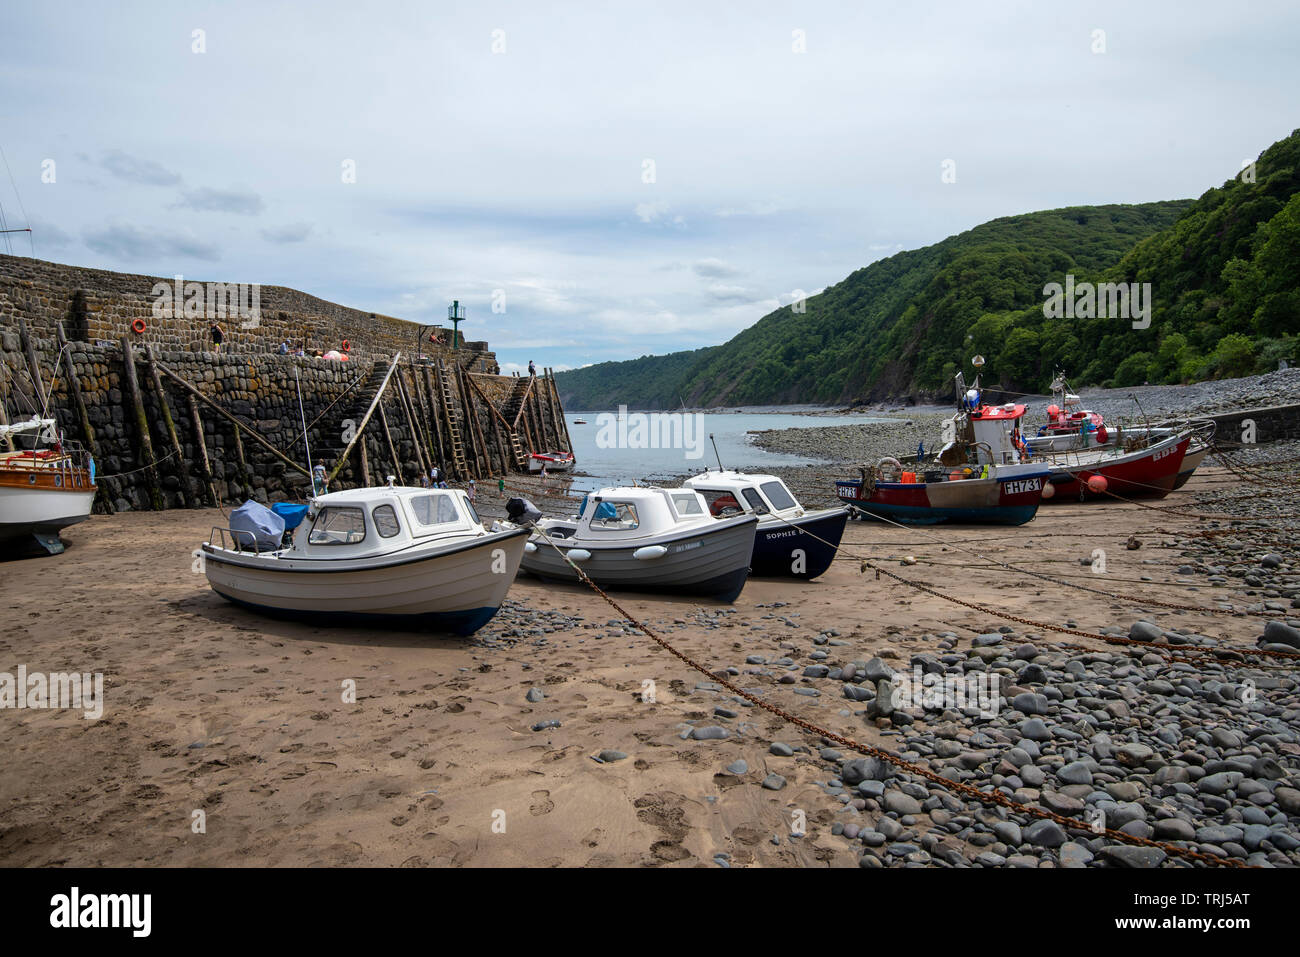 Boats on the Beach at Clovelly, Devon England UK Stock Photo